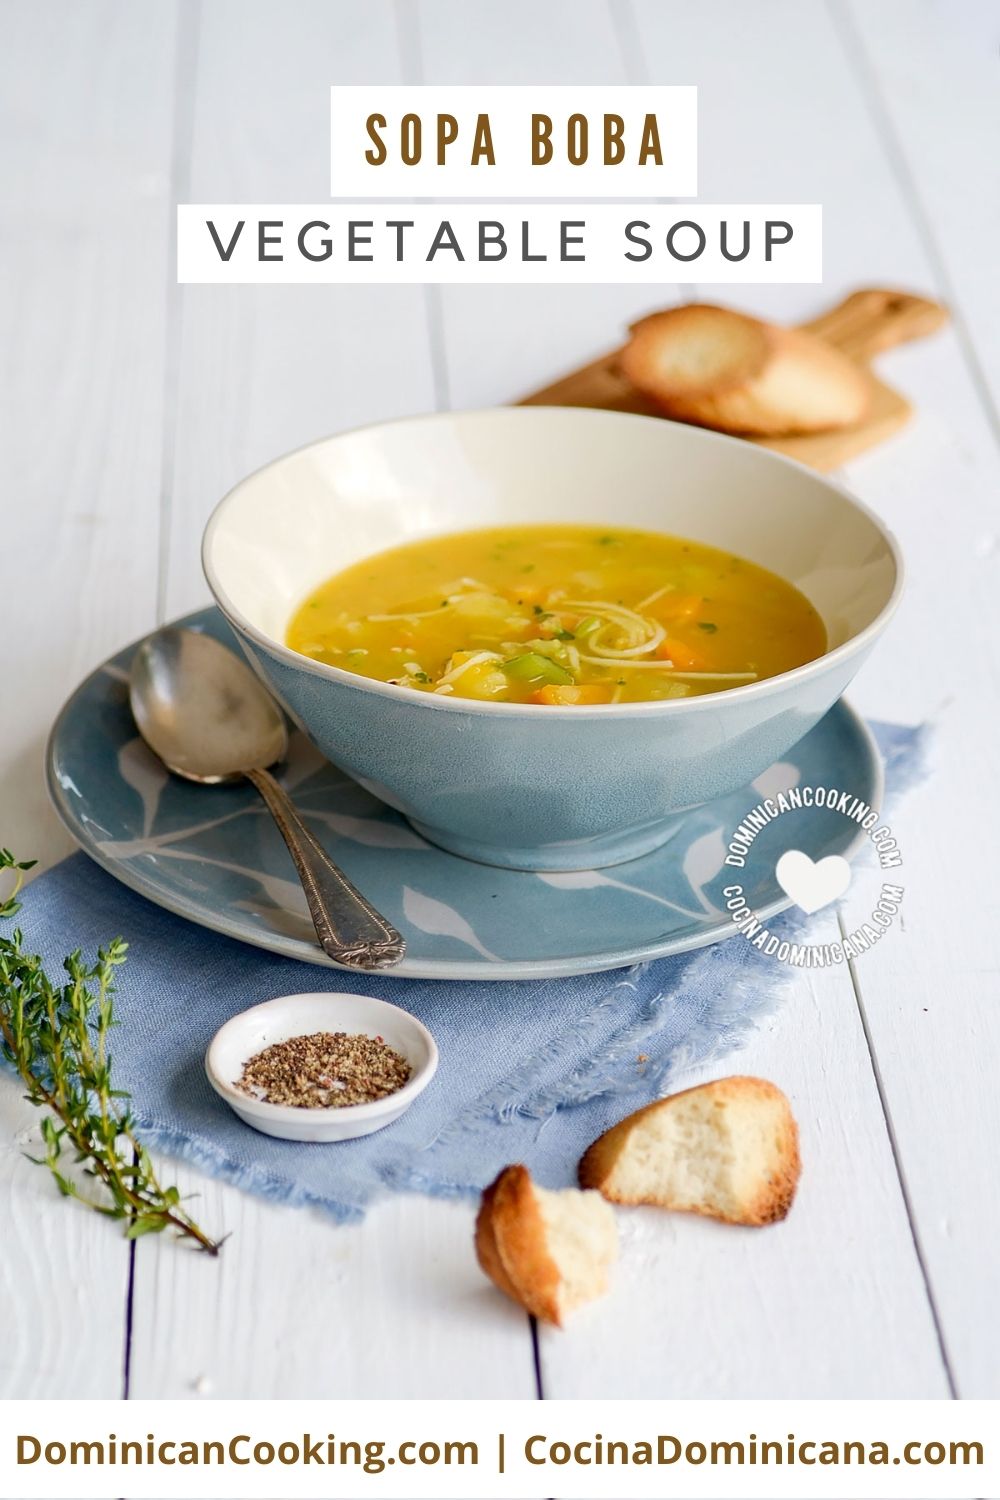 Sopa boba (vegetable soup) recipe.